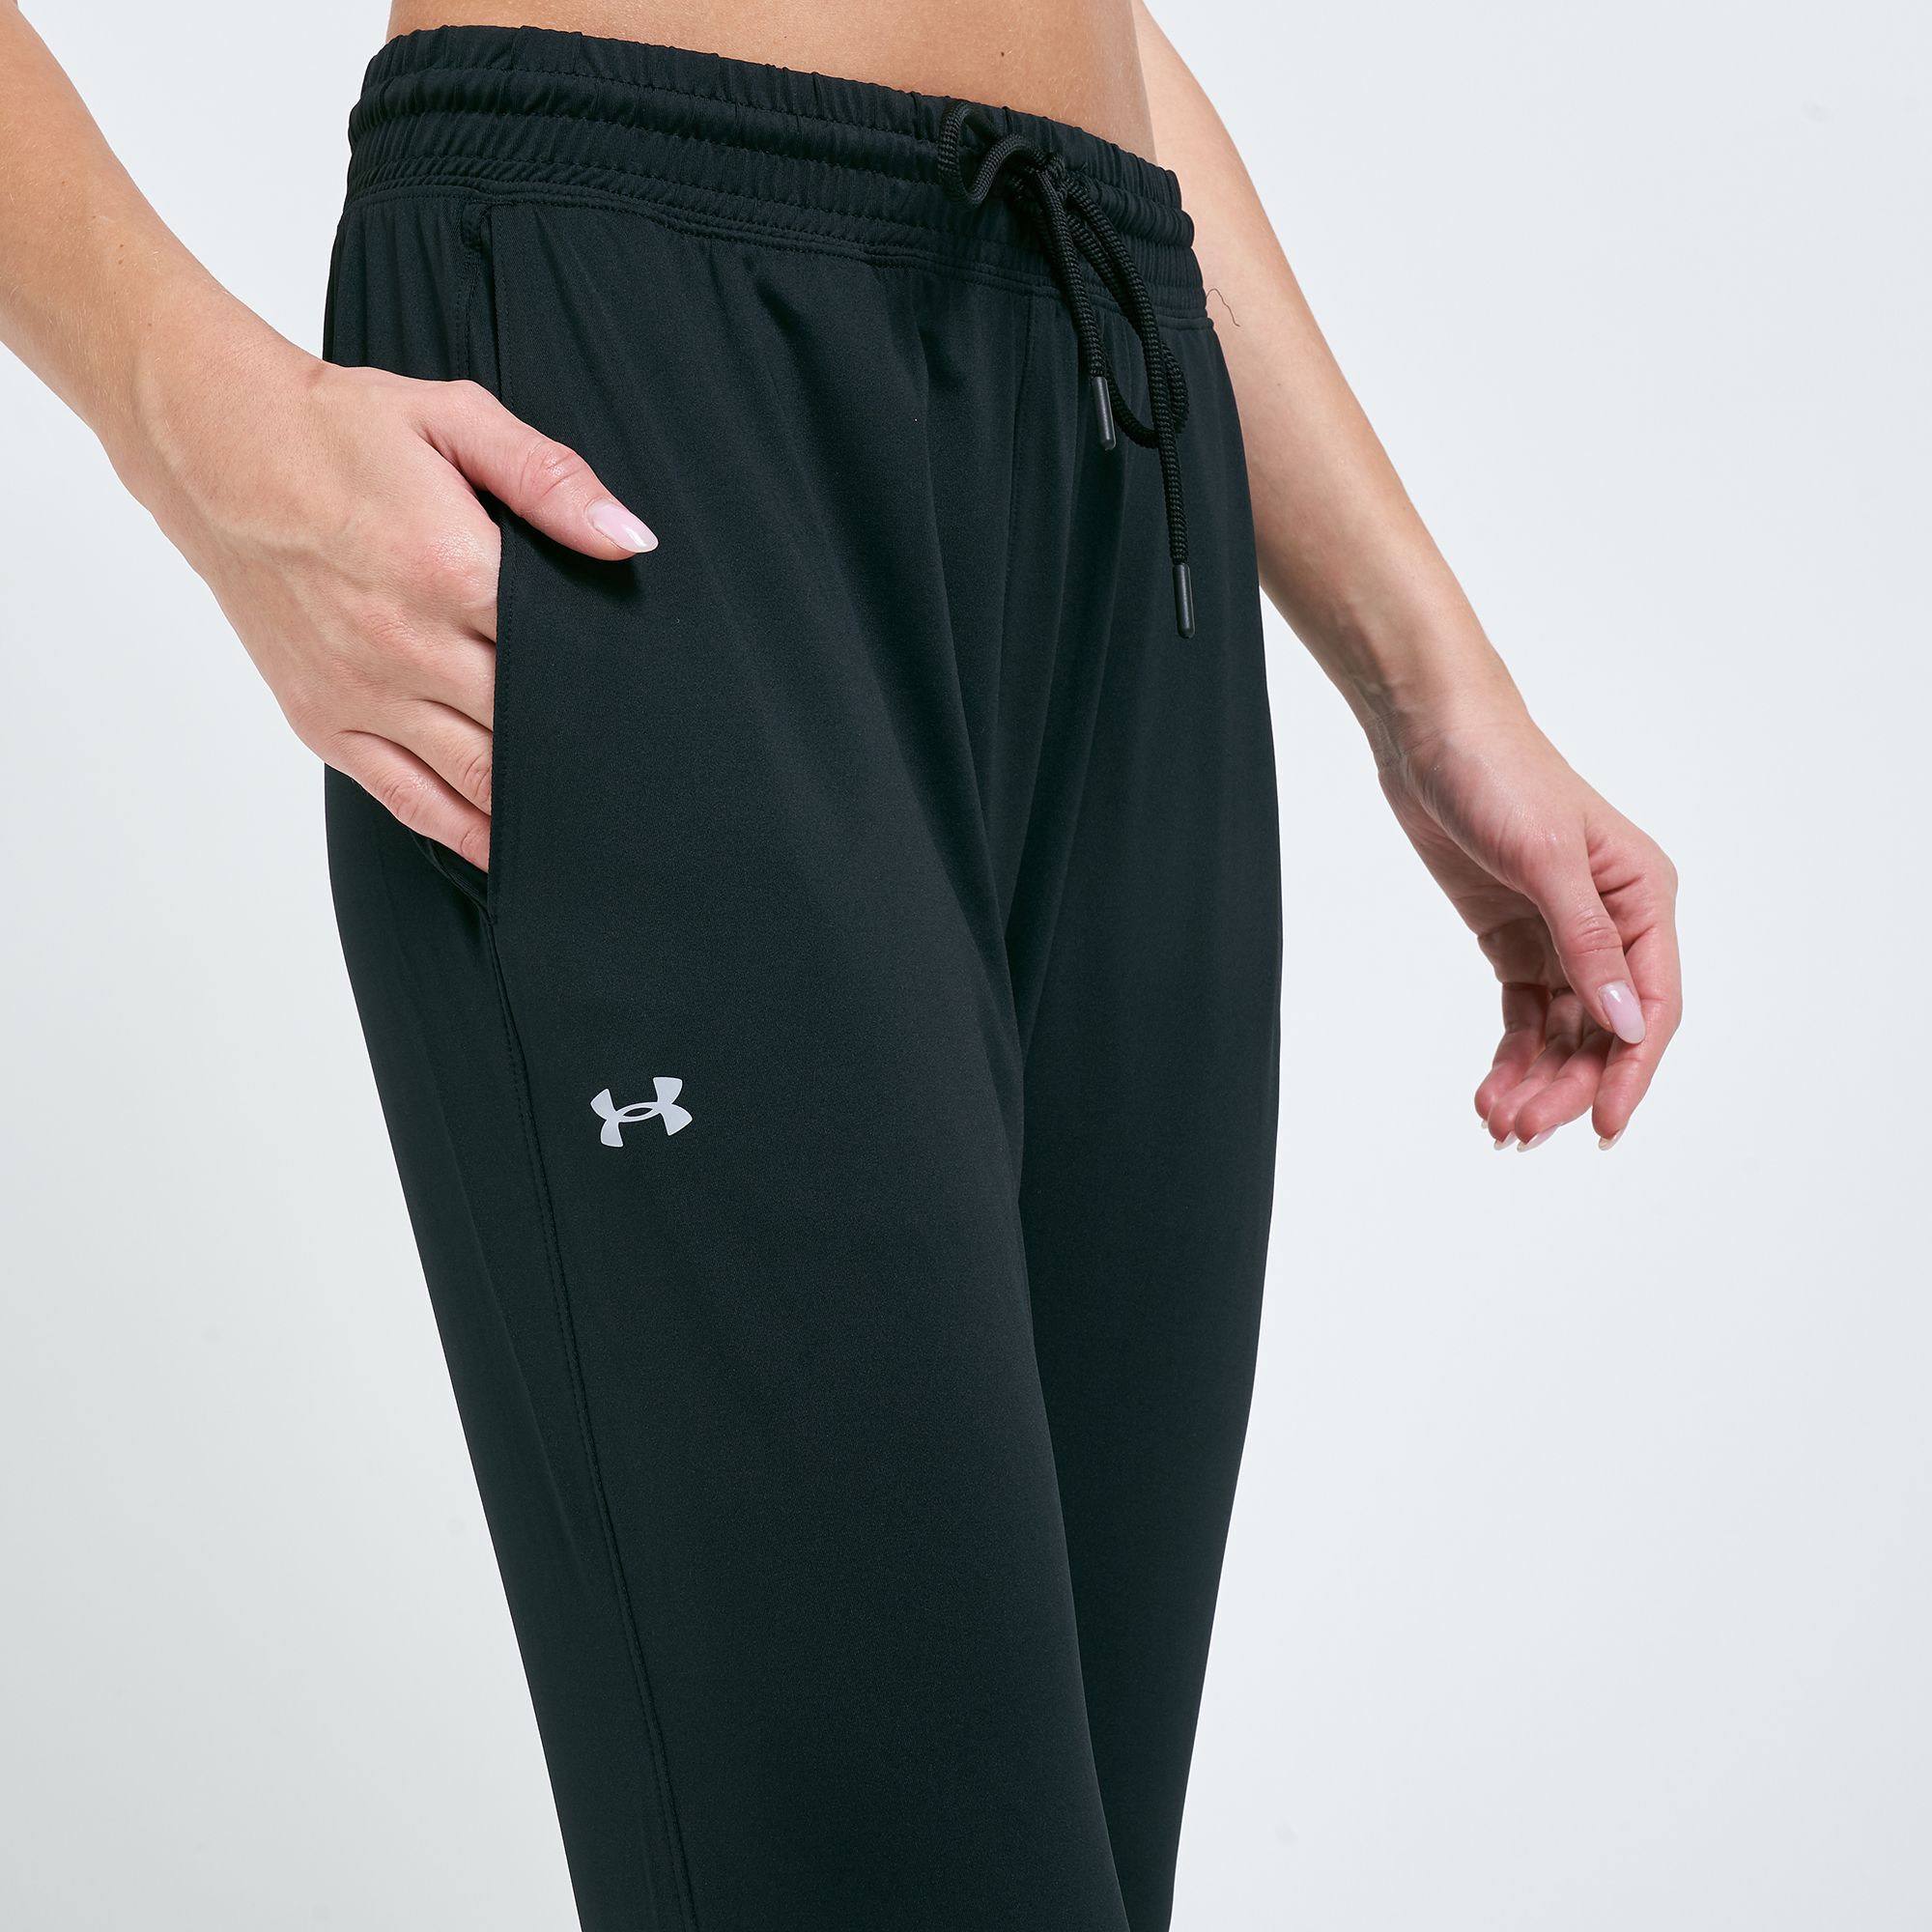 BALEAF Women's Fleece Lined Pants Straight Leg Sweatpants Pull-on Dress  Pants with Zipper Pockets Athletic for Golf Running Black Large